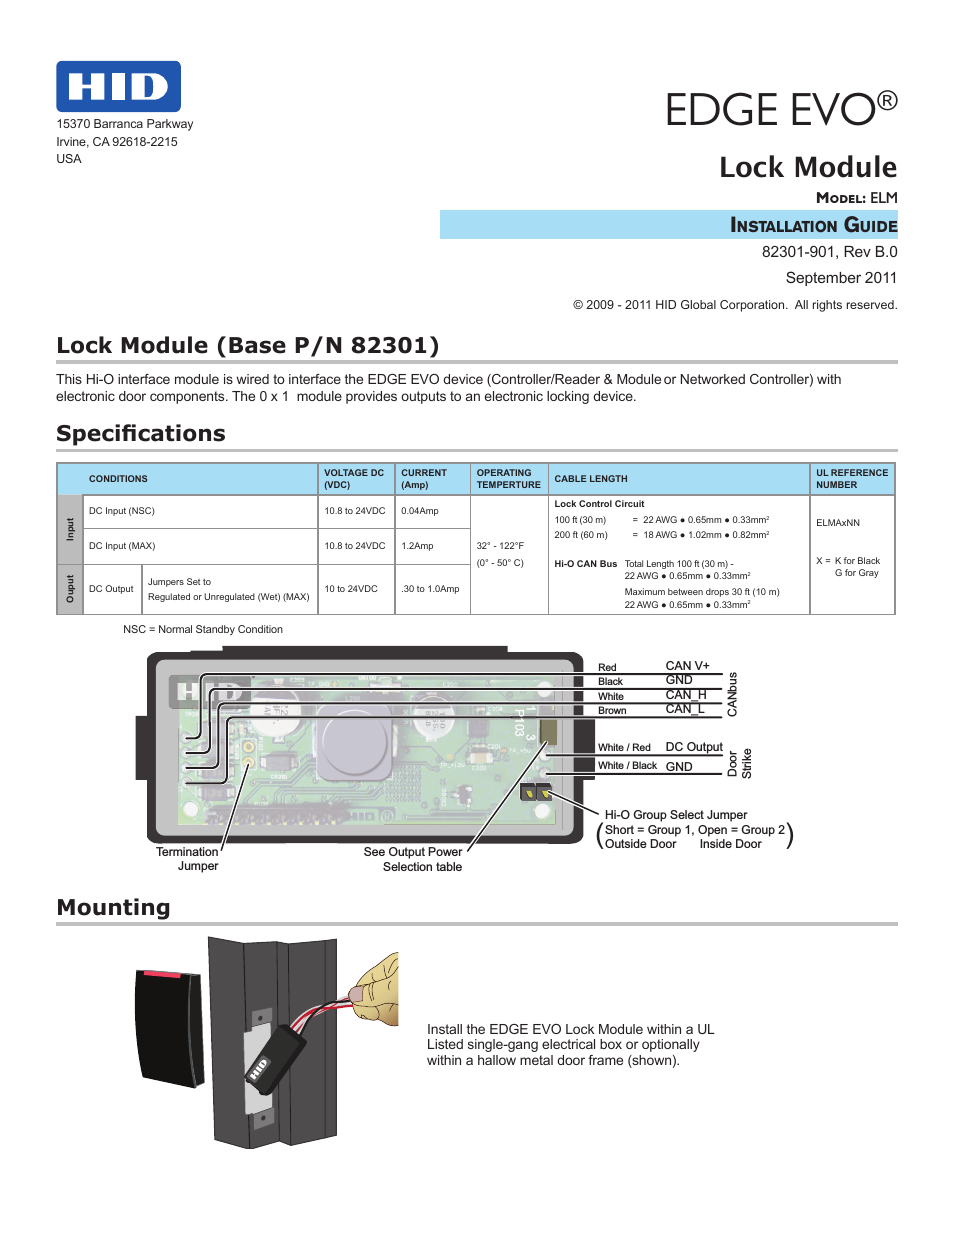 EDGE EVO ELM Hi-O Lock Module Installation Guide